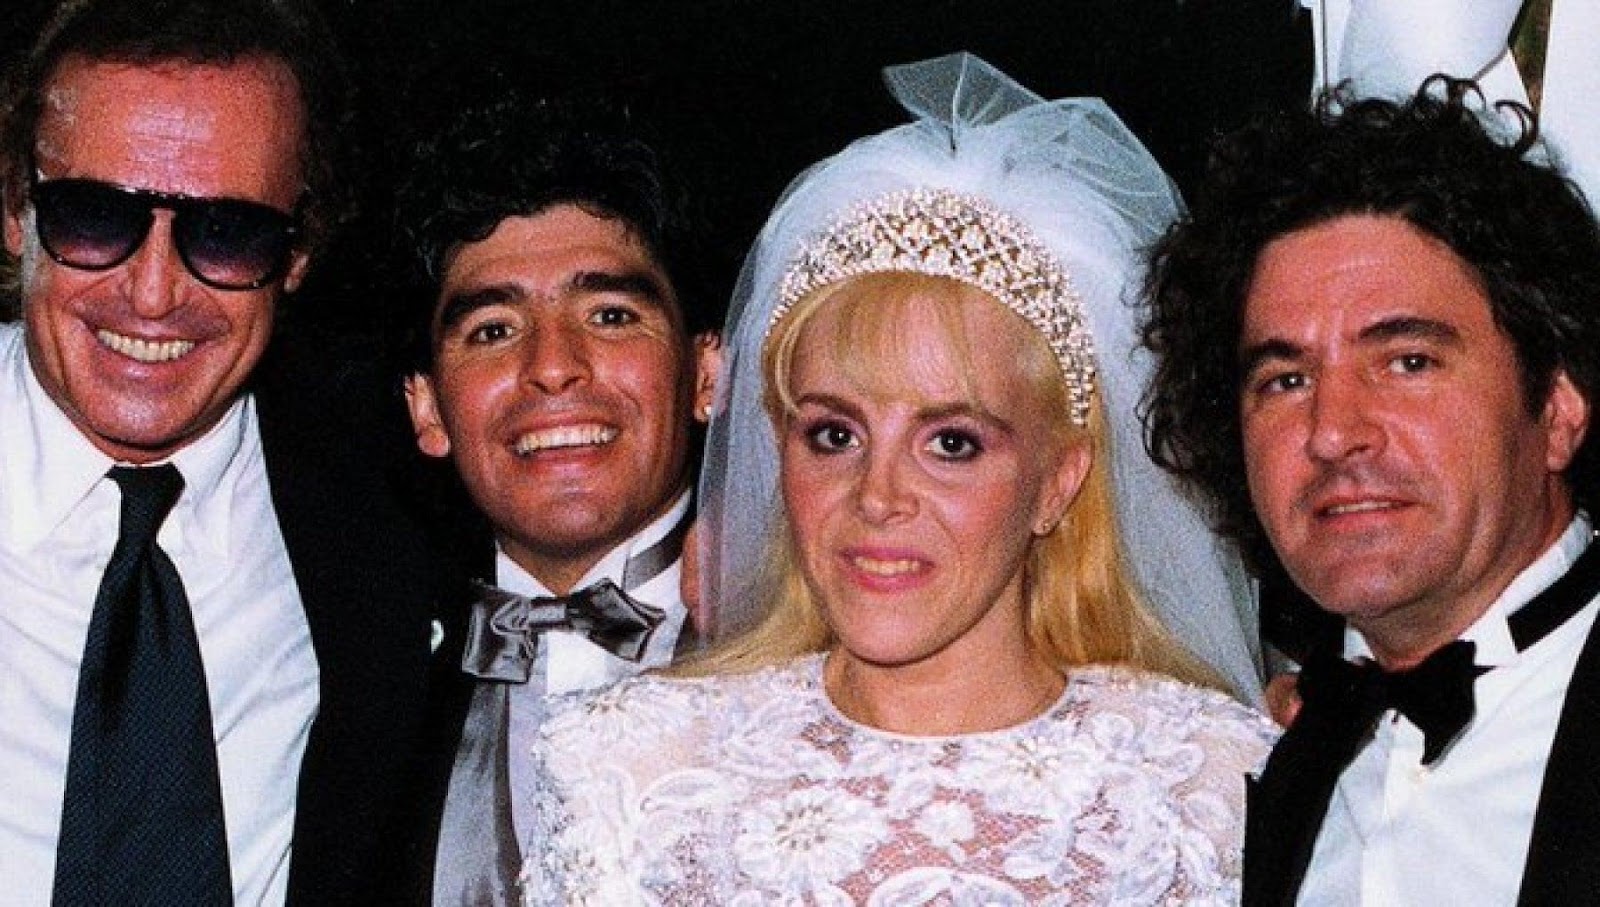 Franco Califano, Diego Maradona, Claudia Villafane and Fausto Leali at Diego’s wedding in 1989.